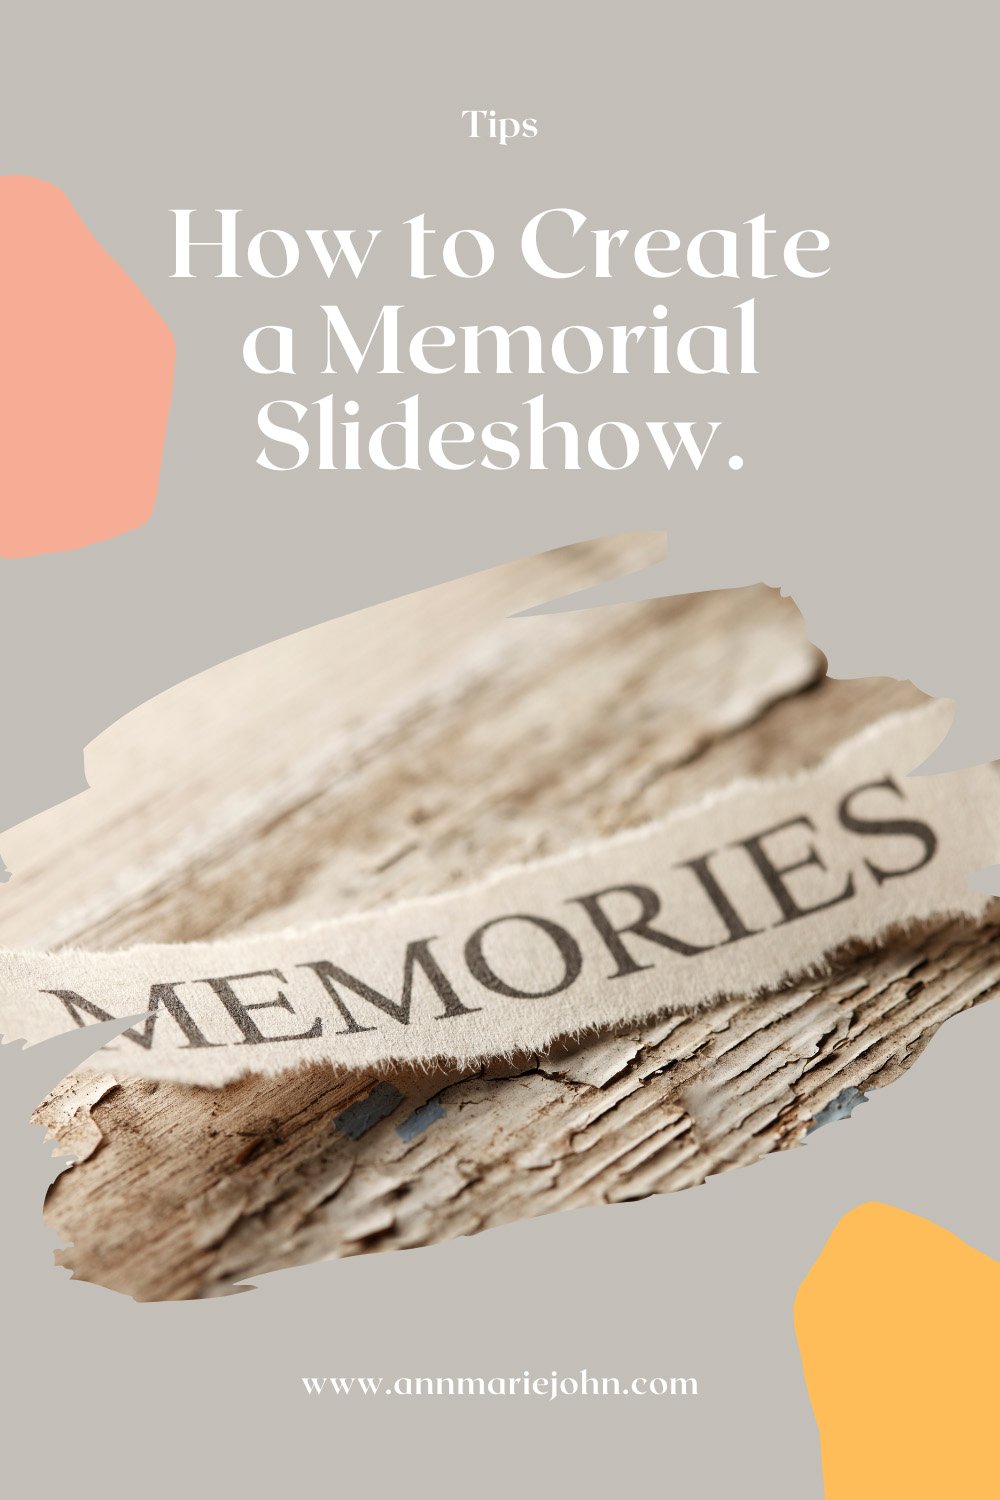 How to Create a Memorial Slideshow